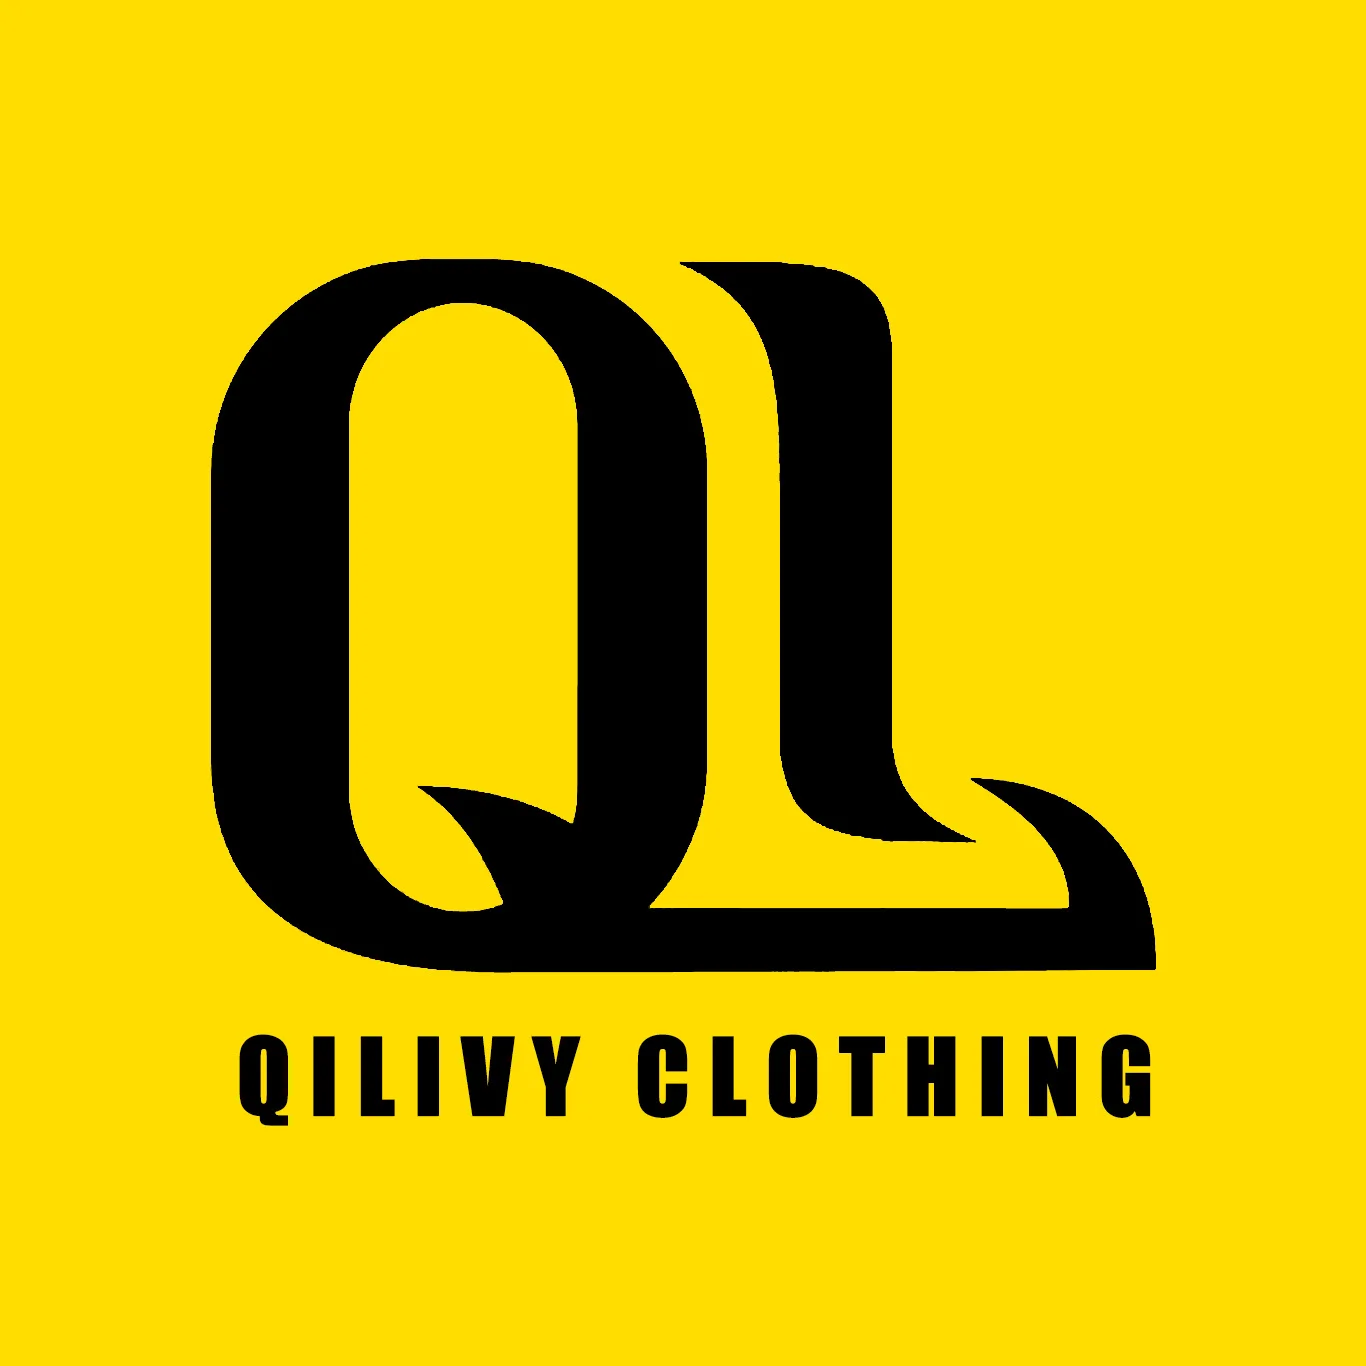 Jiangmen Qilivy Clothing Ltd., Co. - Baby rompers, Panties